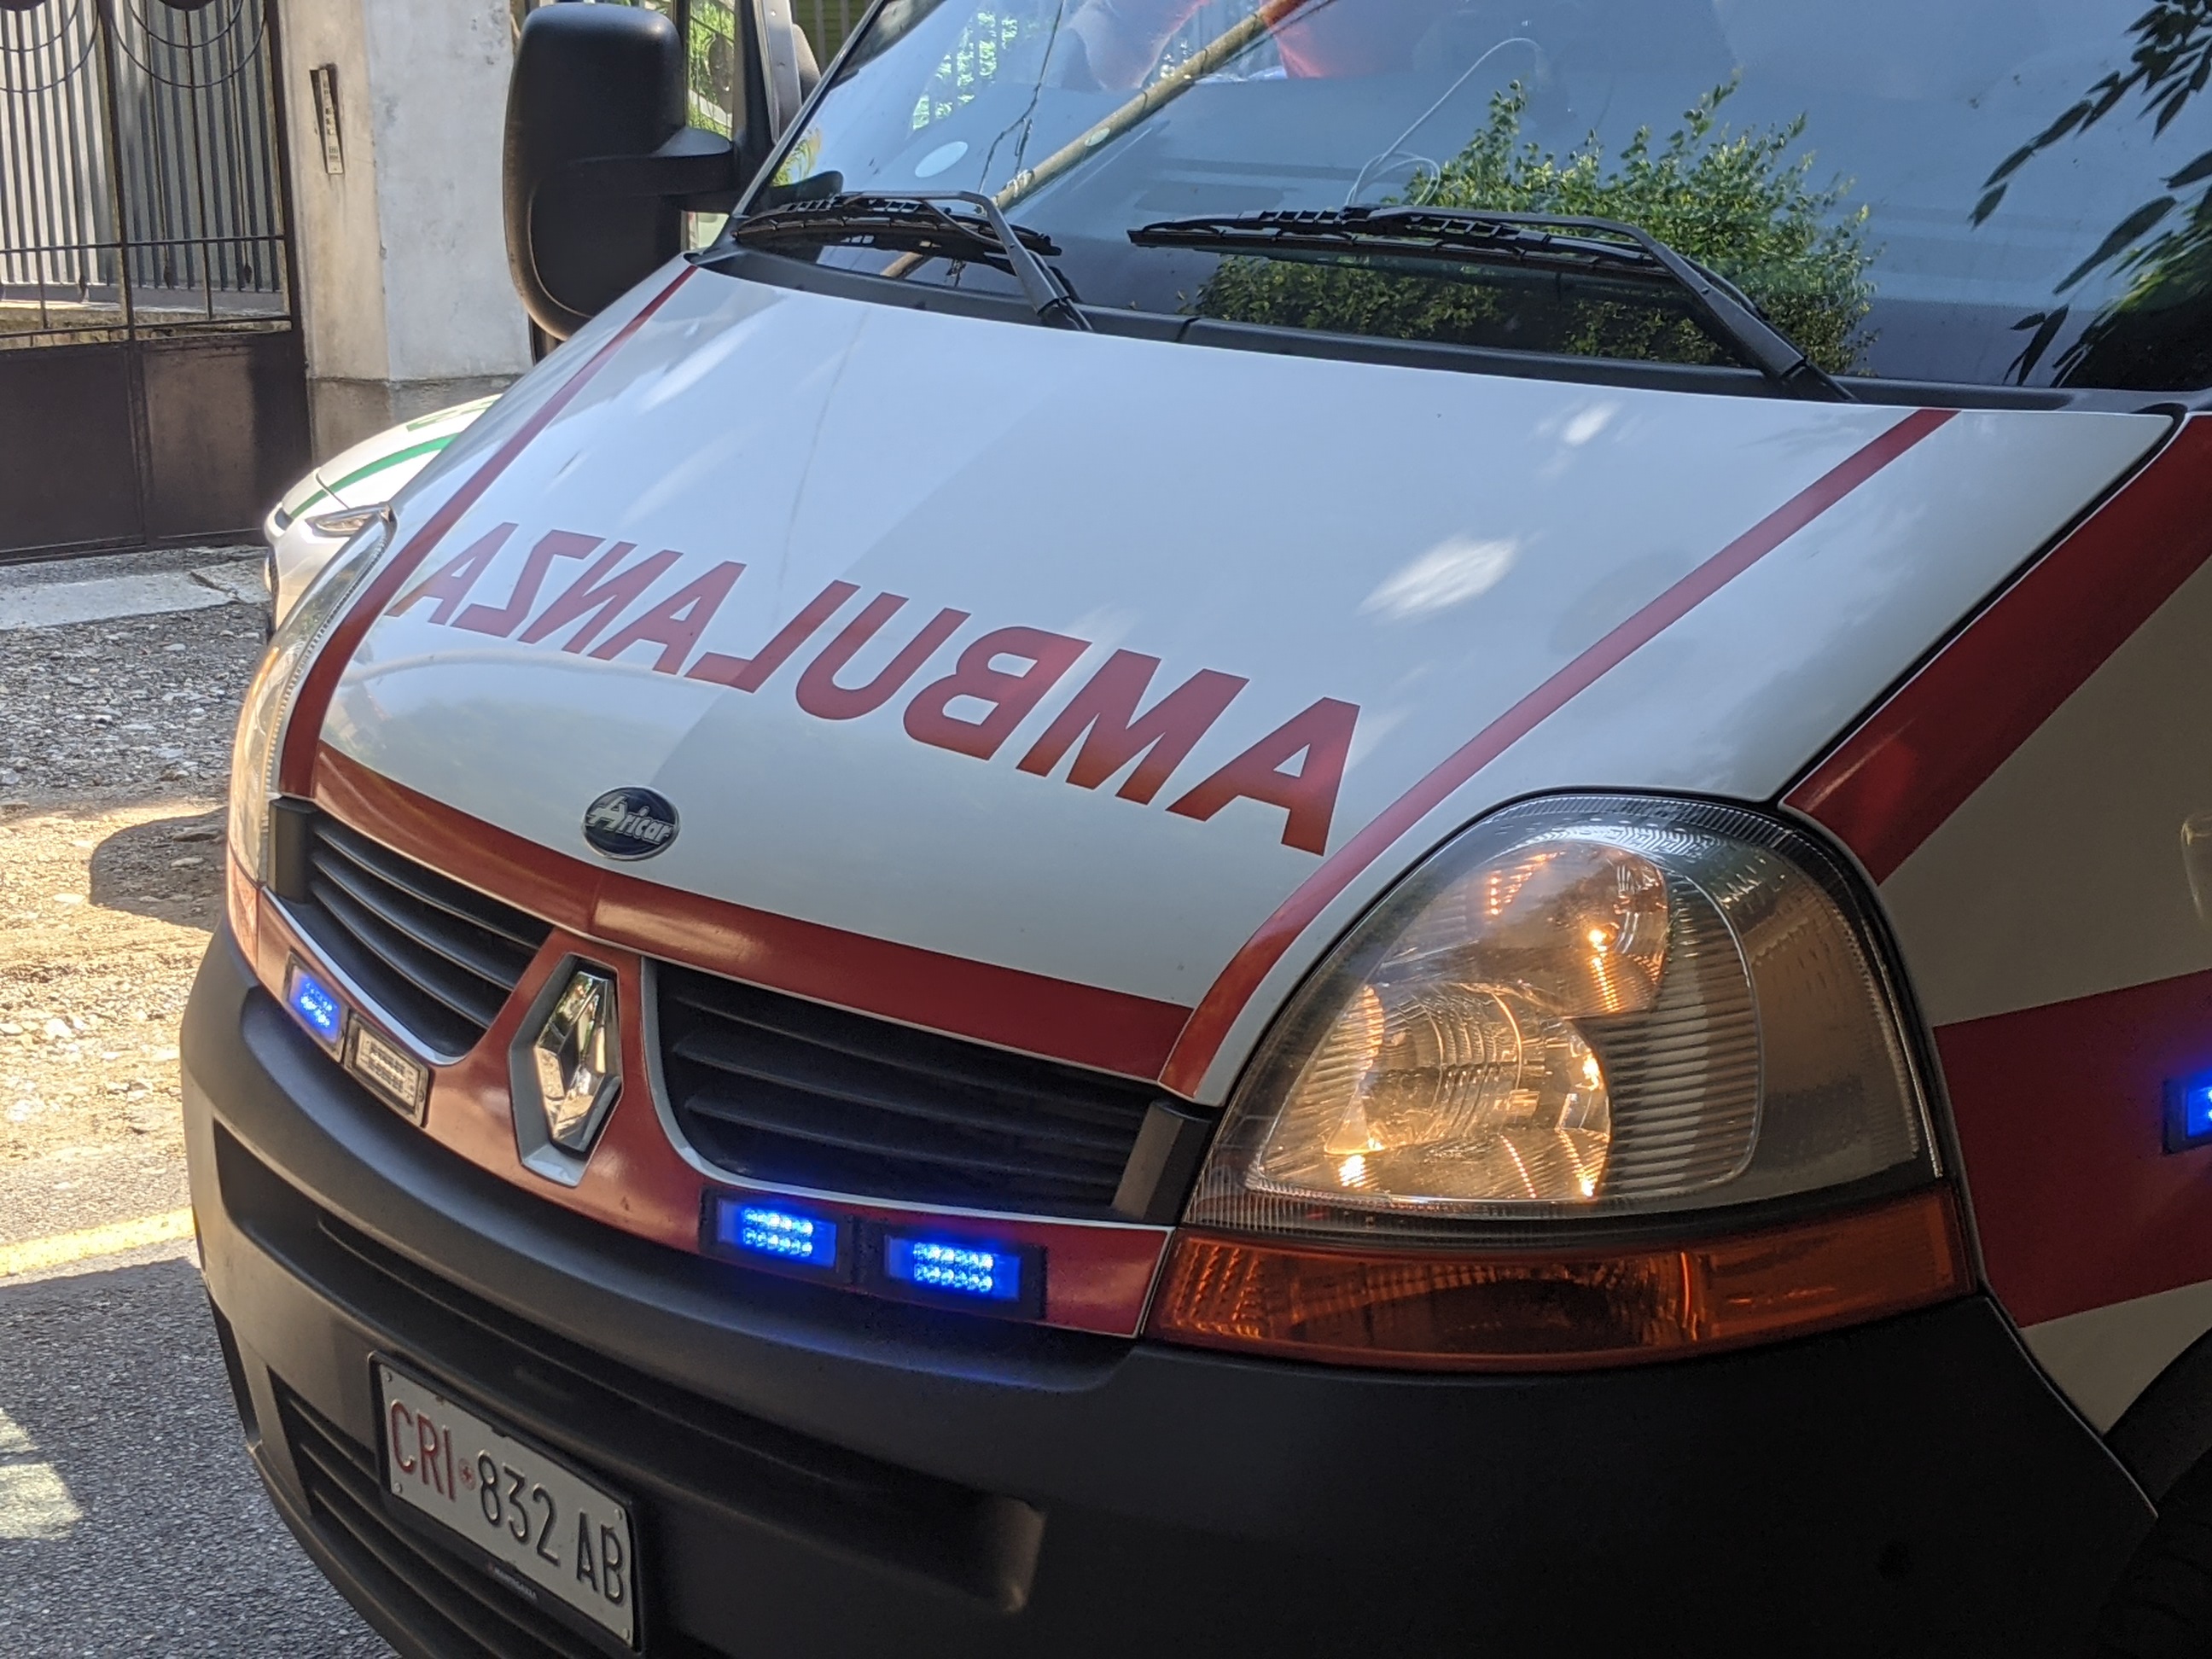 Panorama cronaca: motociclista ferito a Ceriano, caduta bici a Cogliate